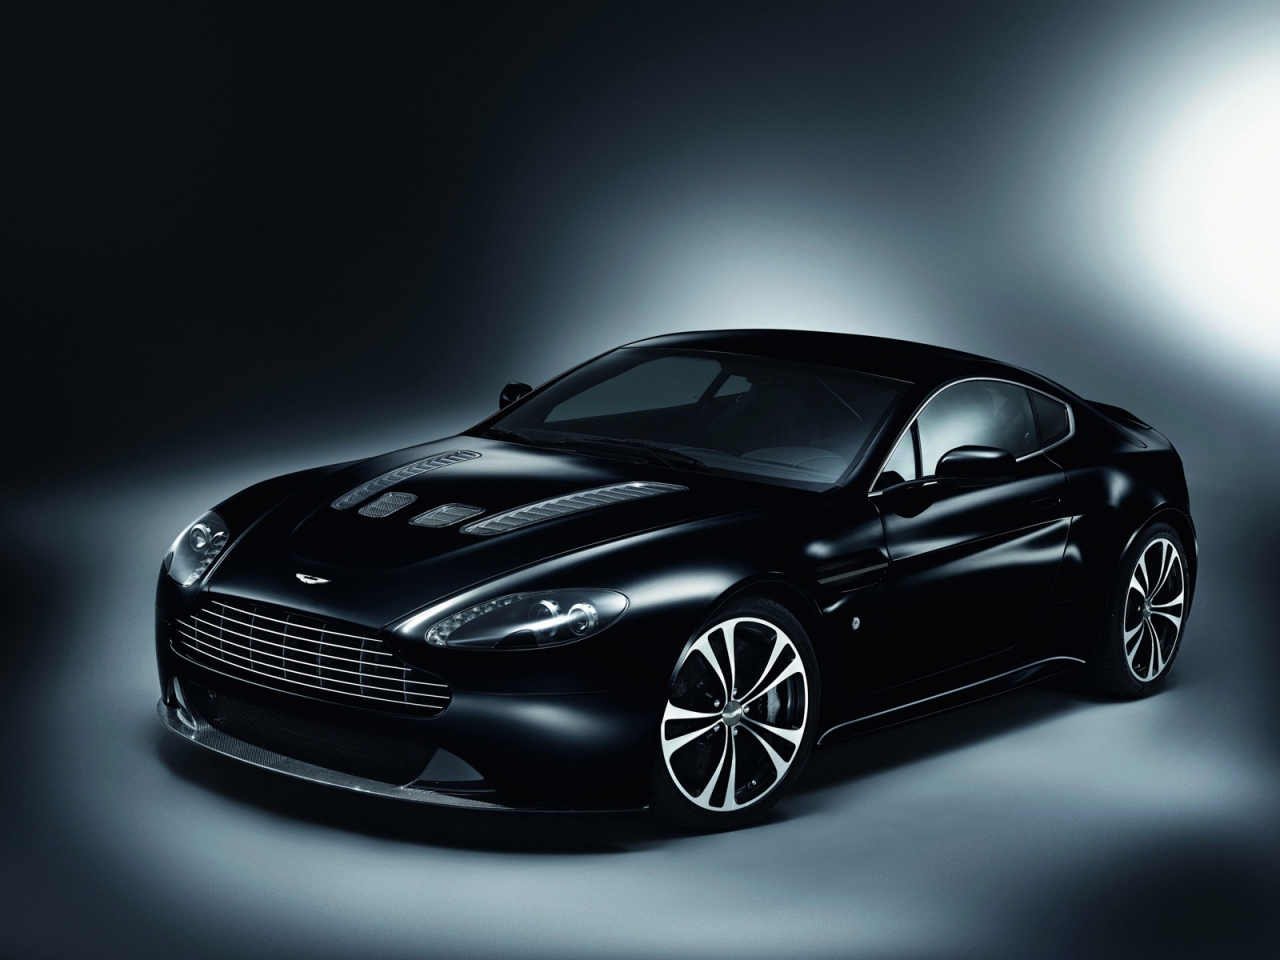 Aston Martin V12 Vantage Carbon Black for 1280 x 960 resolution